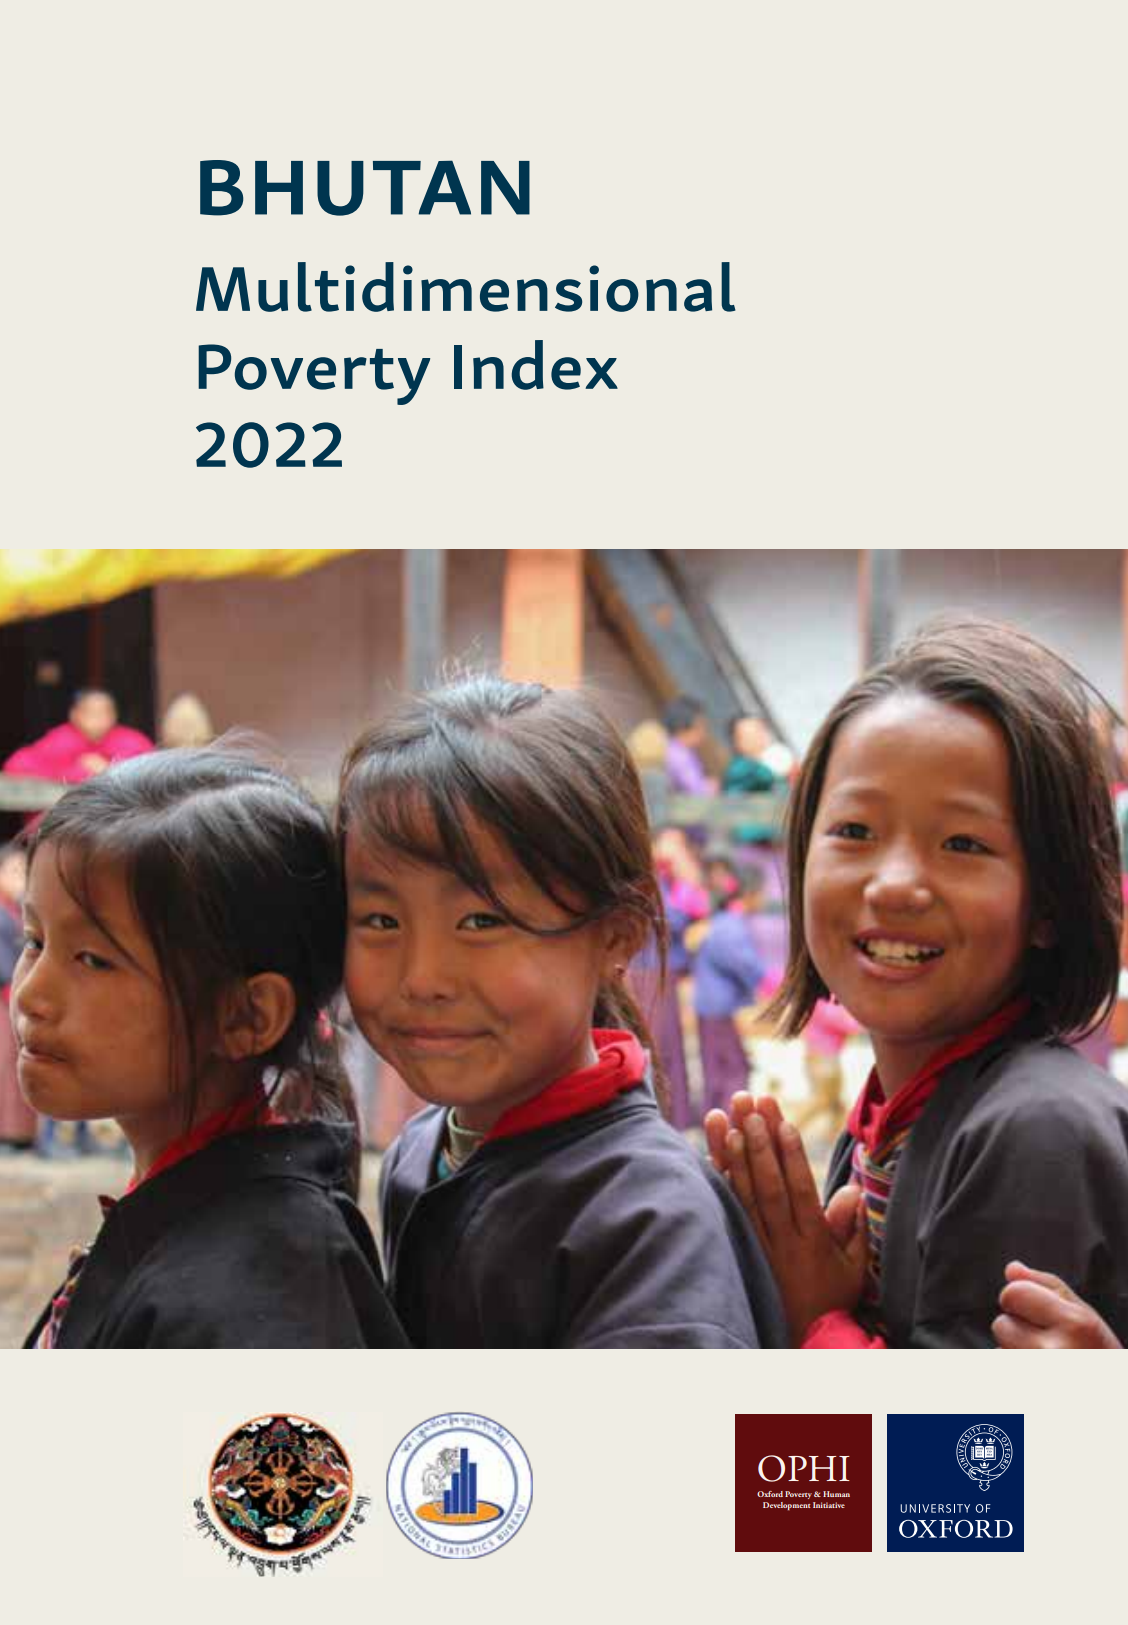 Cover of Bhutan MPI 2022 report